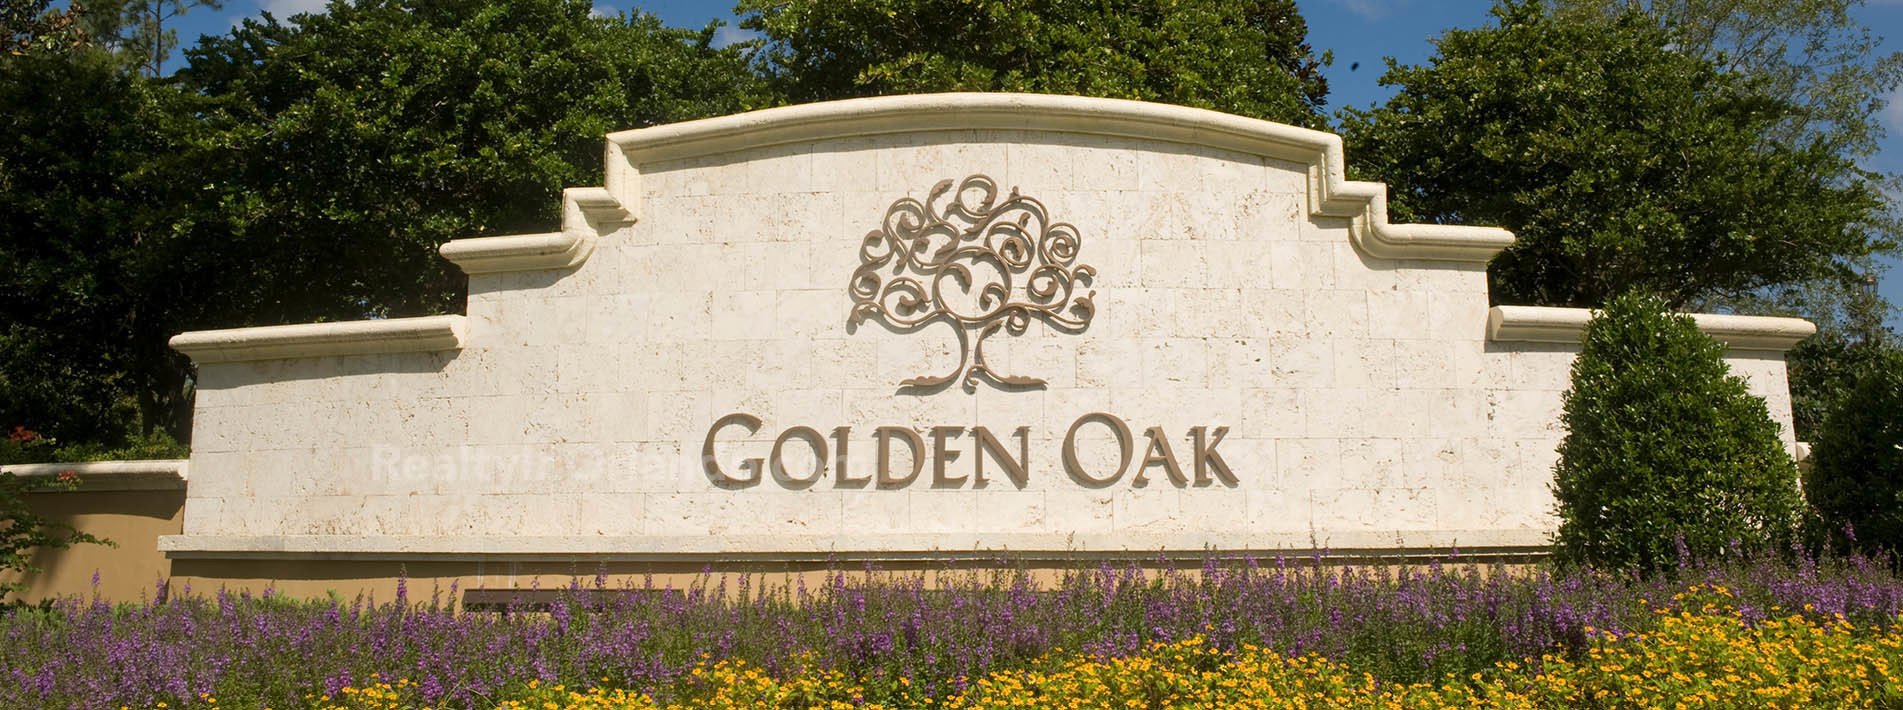 Disney Golden Oak Homes